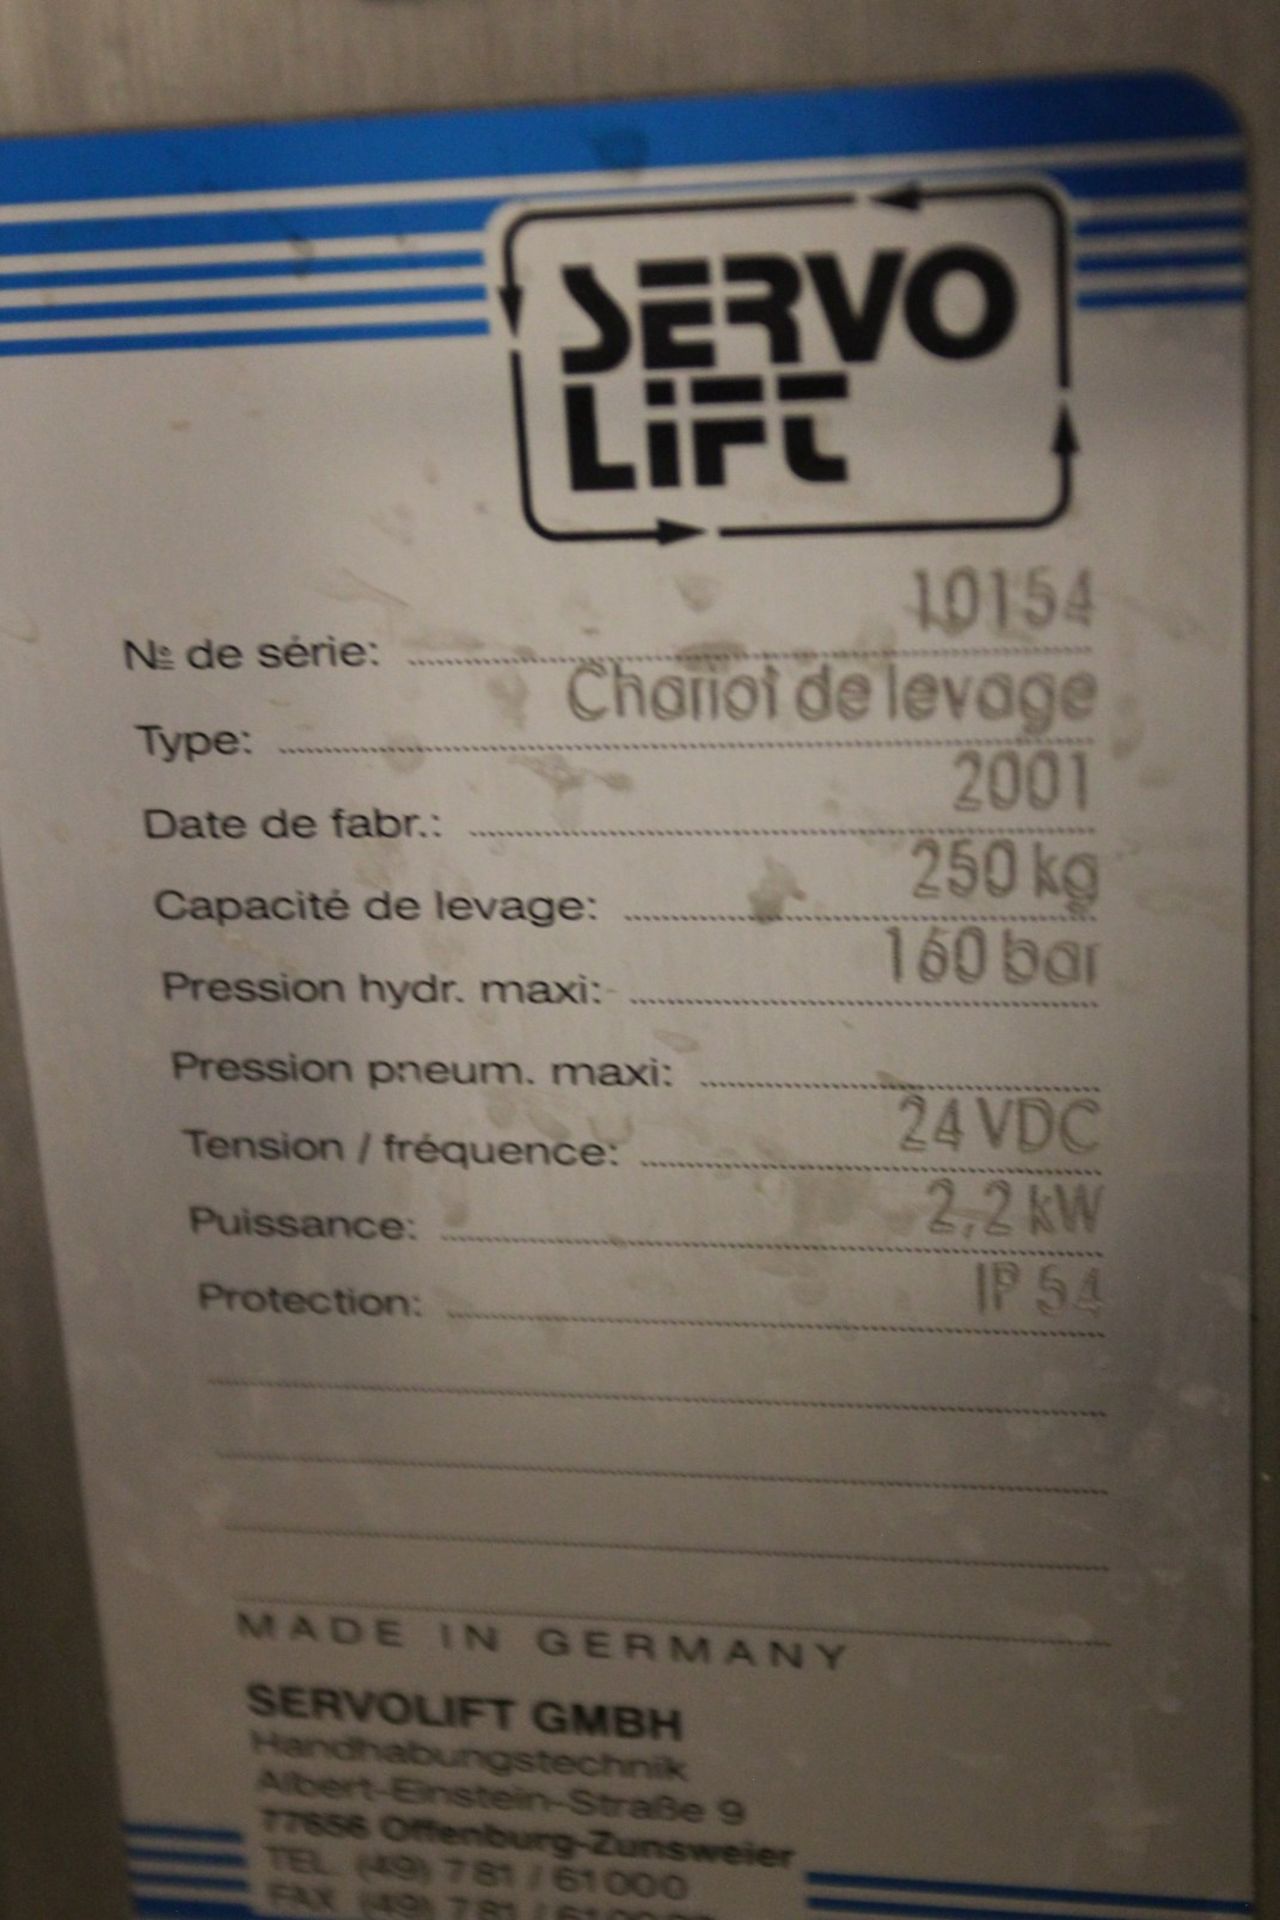 2001 Servo Lift Chariot de Levage (Lifting Trolley), s/n 10154, 250 kg Capacity, 160 bar Max Hyd - Bild 7 aus 7